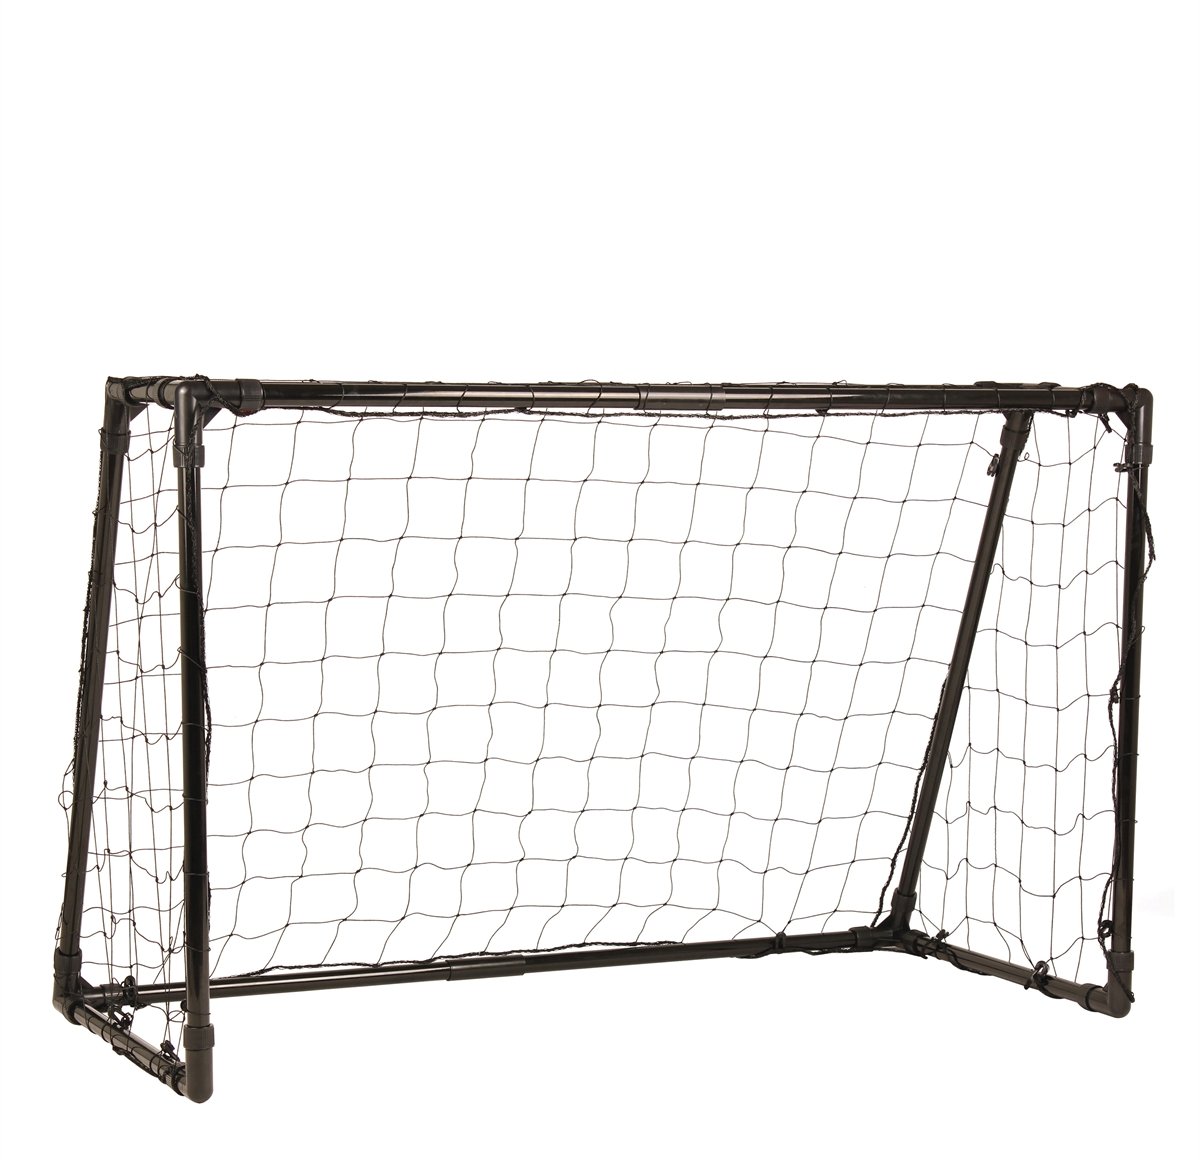 My Hood - Golazo Football Goal 153 x 100 cm - Black (302491) - Leker